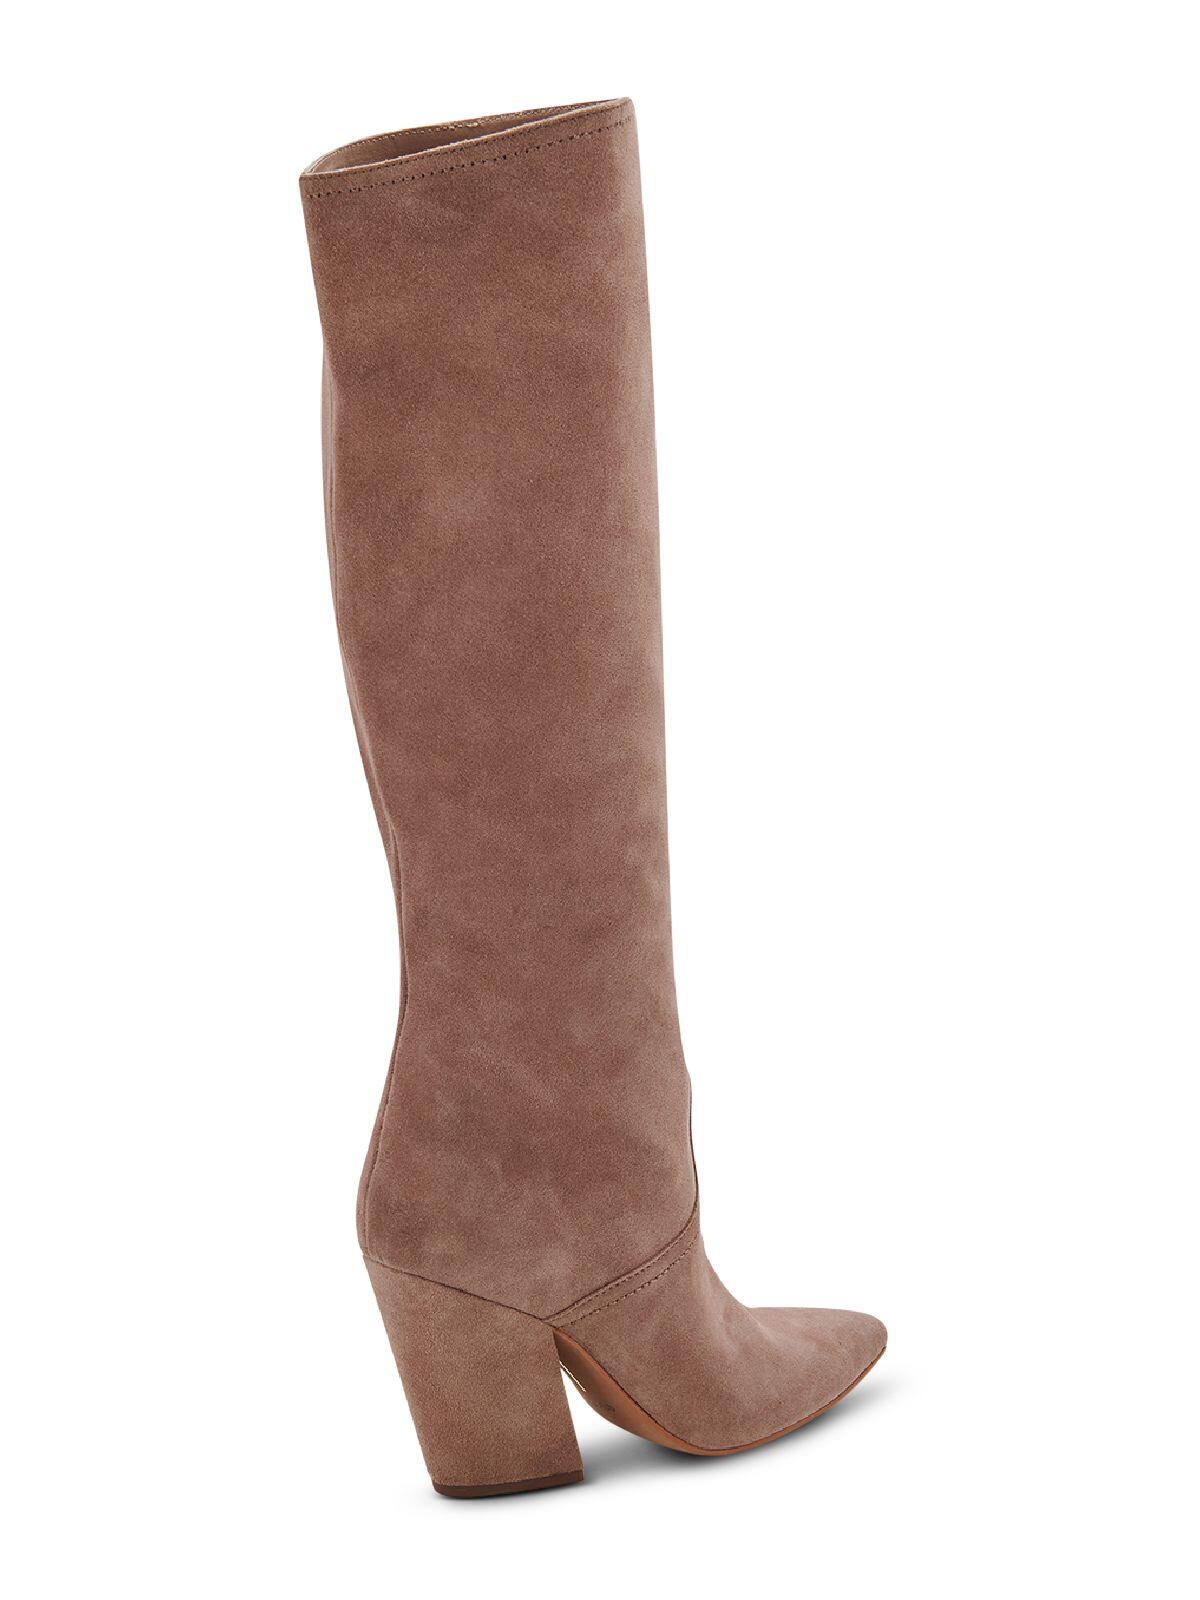 DOLCE VITA Womens Beige Comfort Nathen Pointed Toe Block Heel Leather Dress Boots 6 M